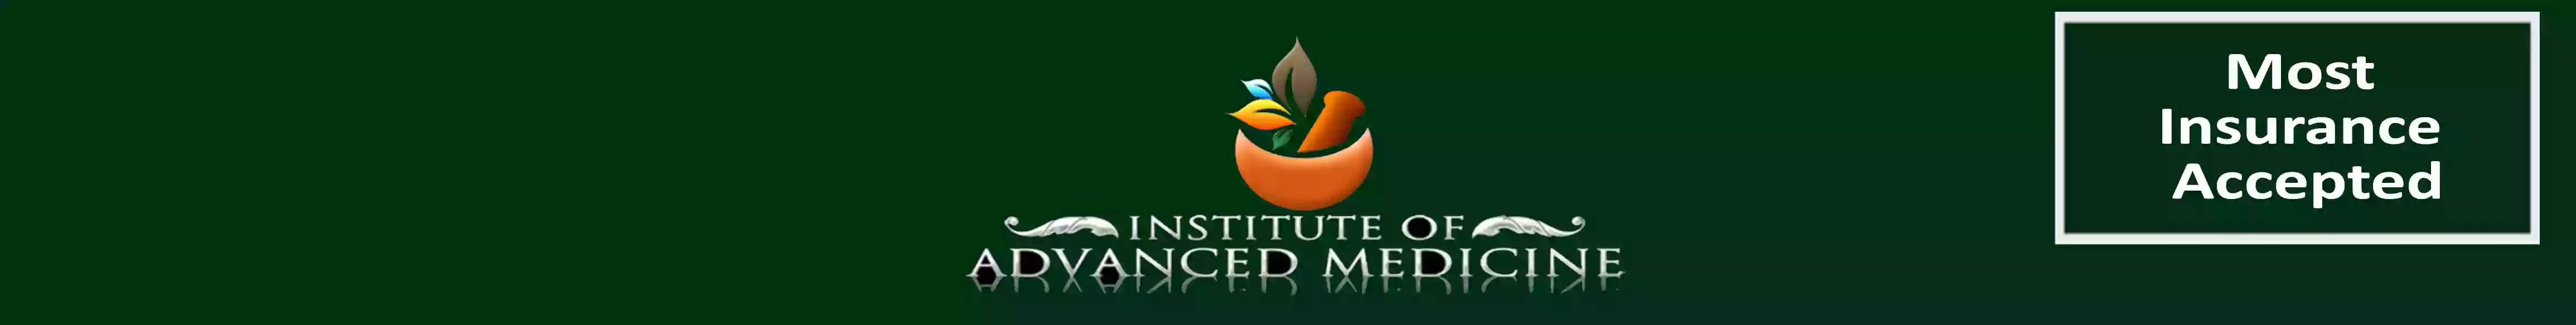 Institute Of Advanced Medicine